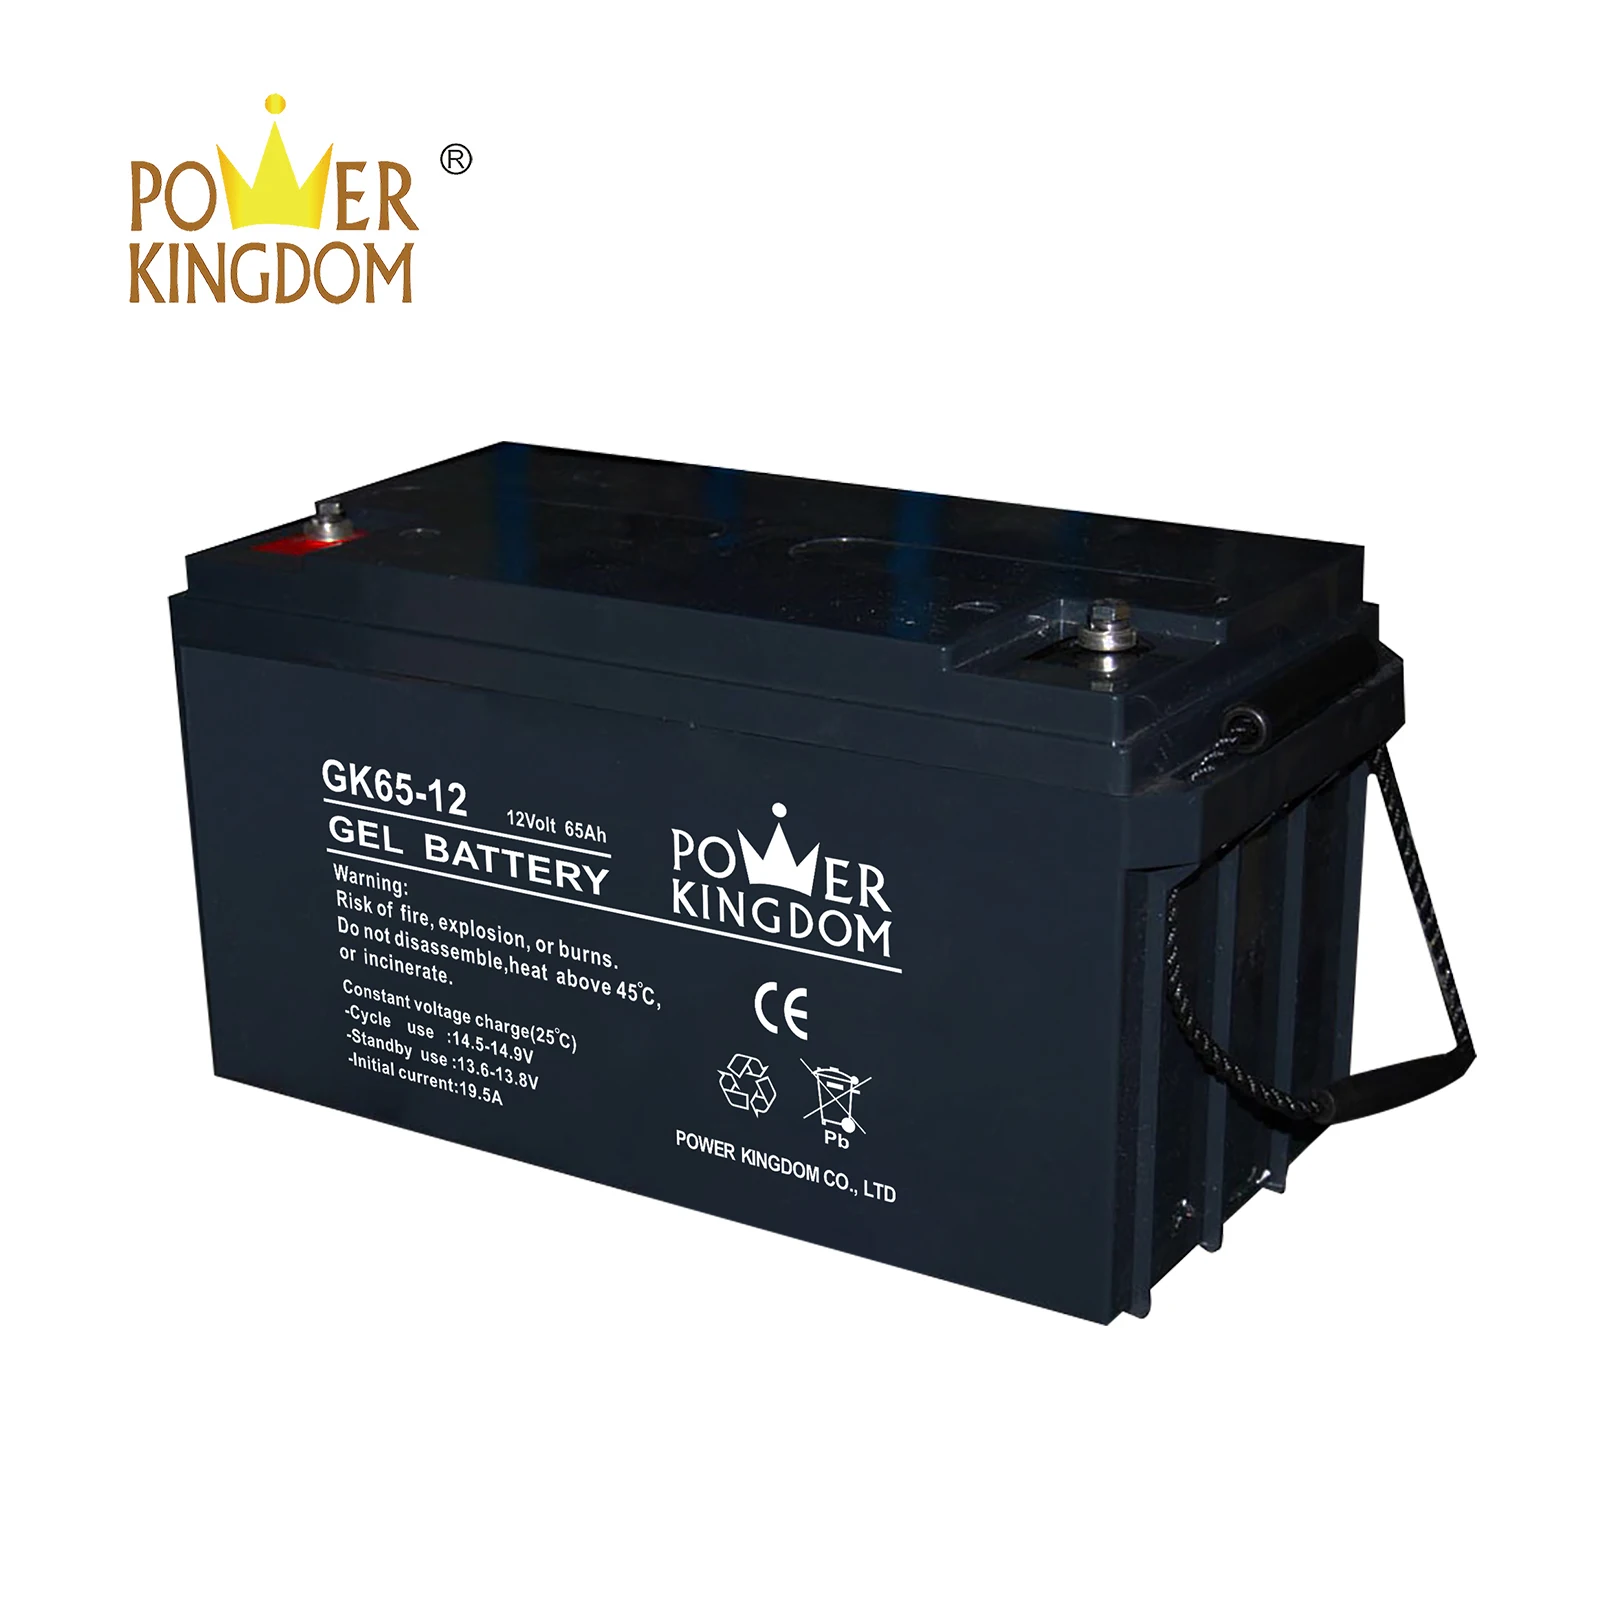 Power Kingdom 12v sla battery sizes company medical equipment